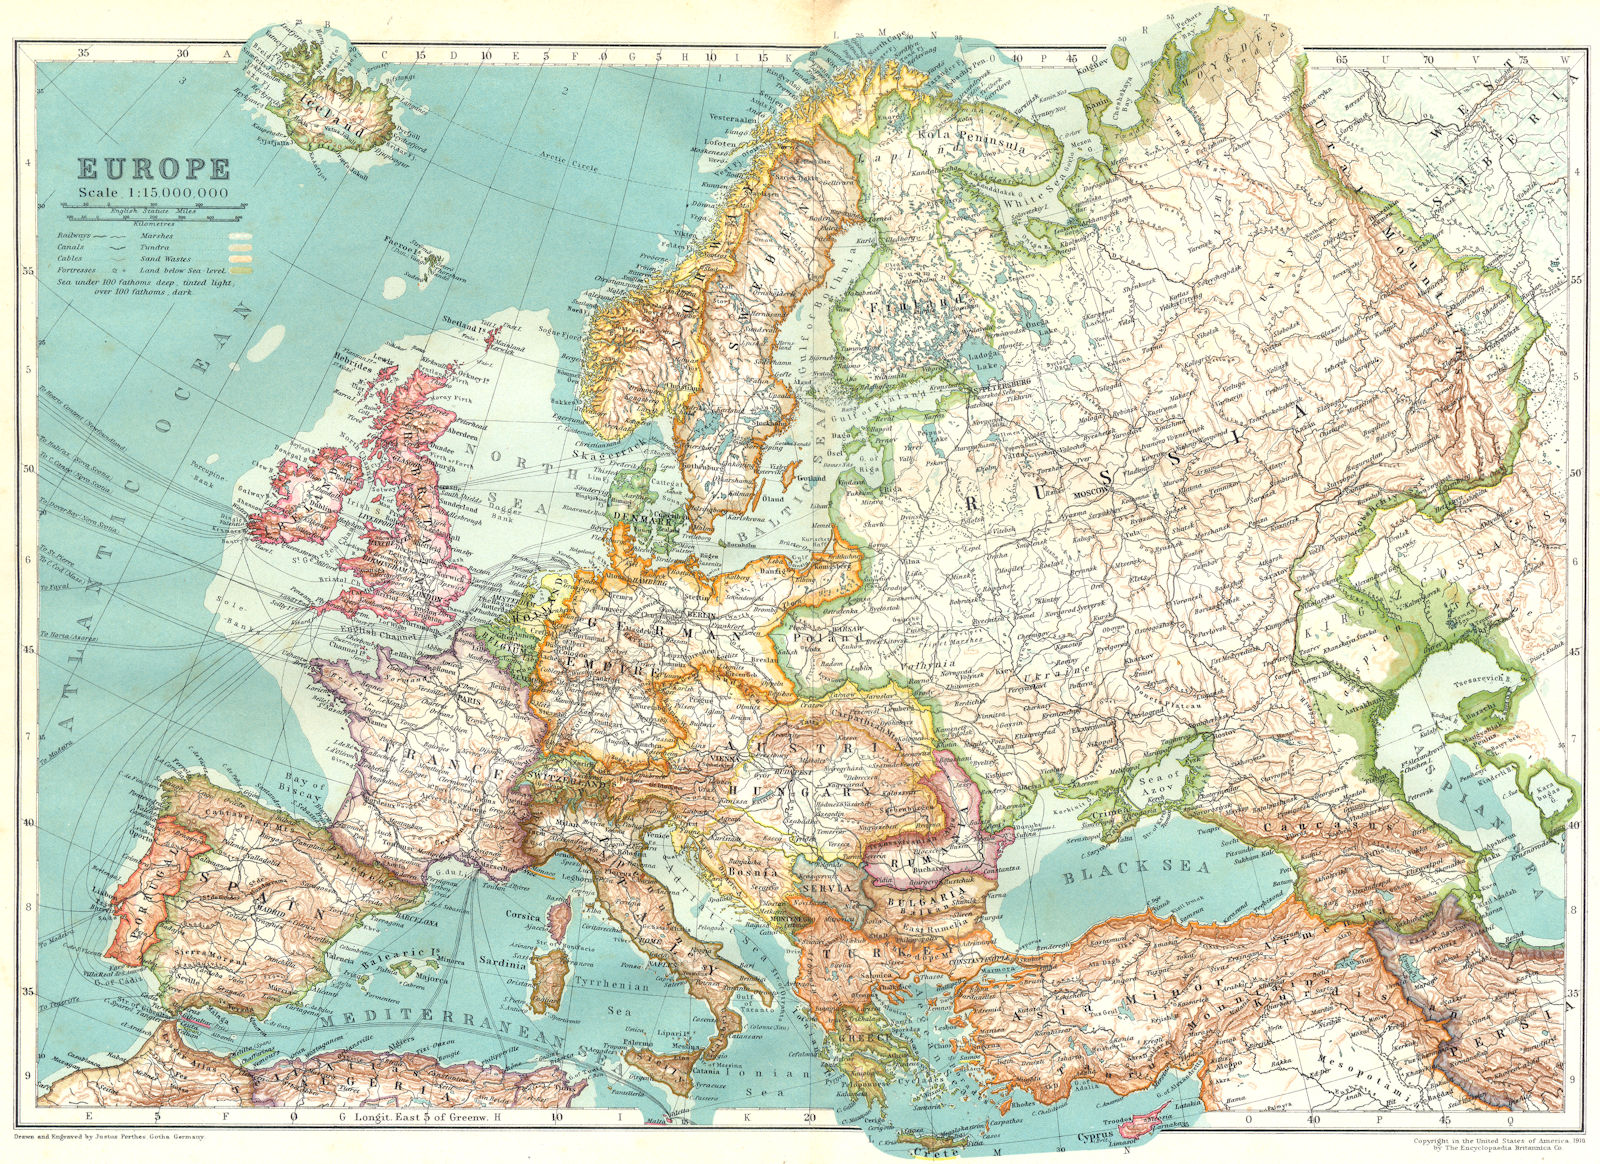 EUROPE. Europe 1910 old antique vintage map plan chart